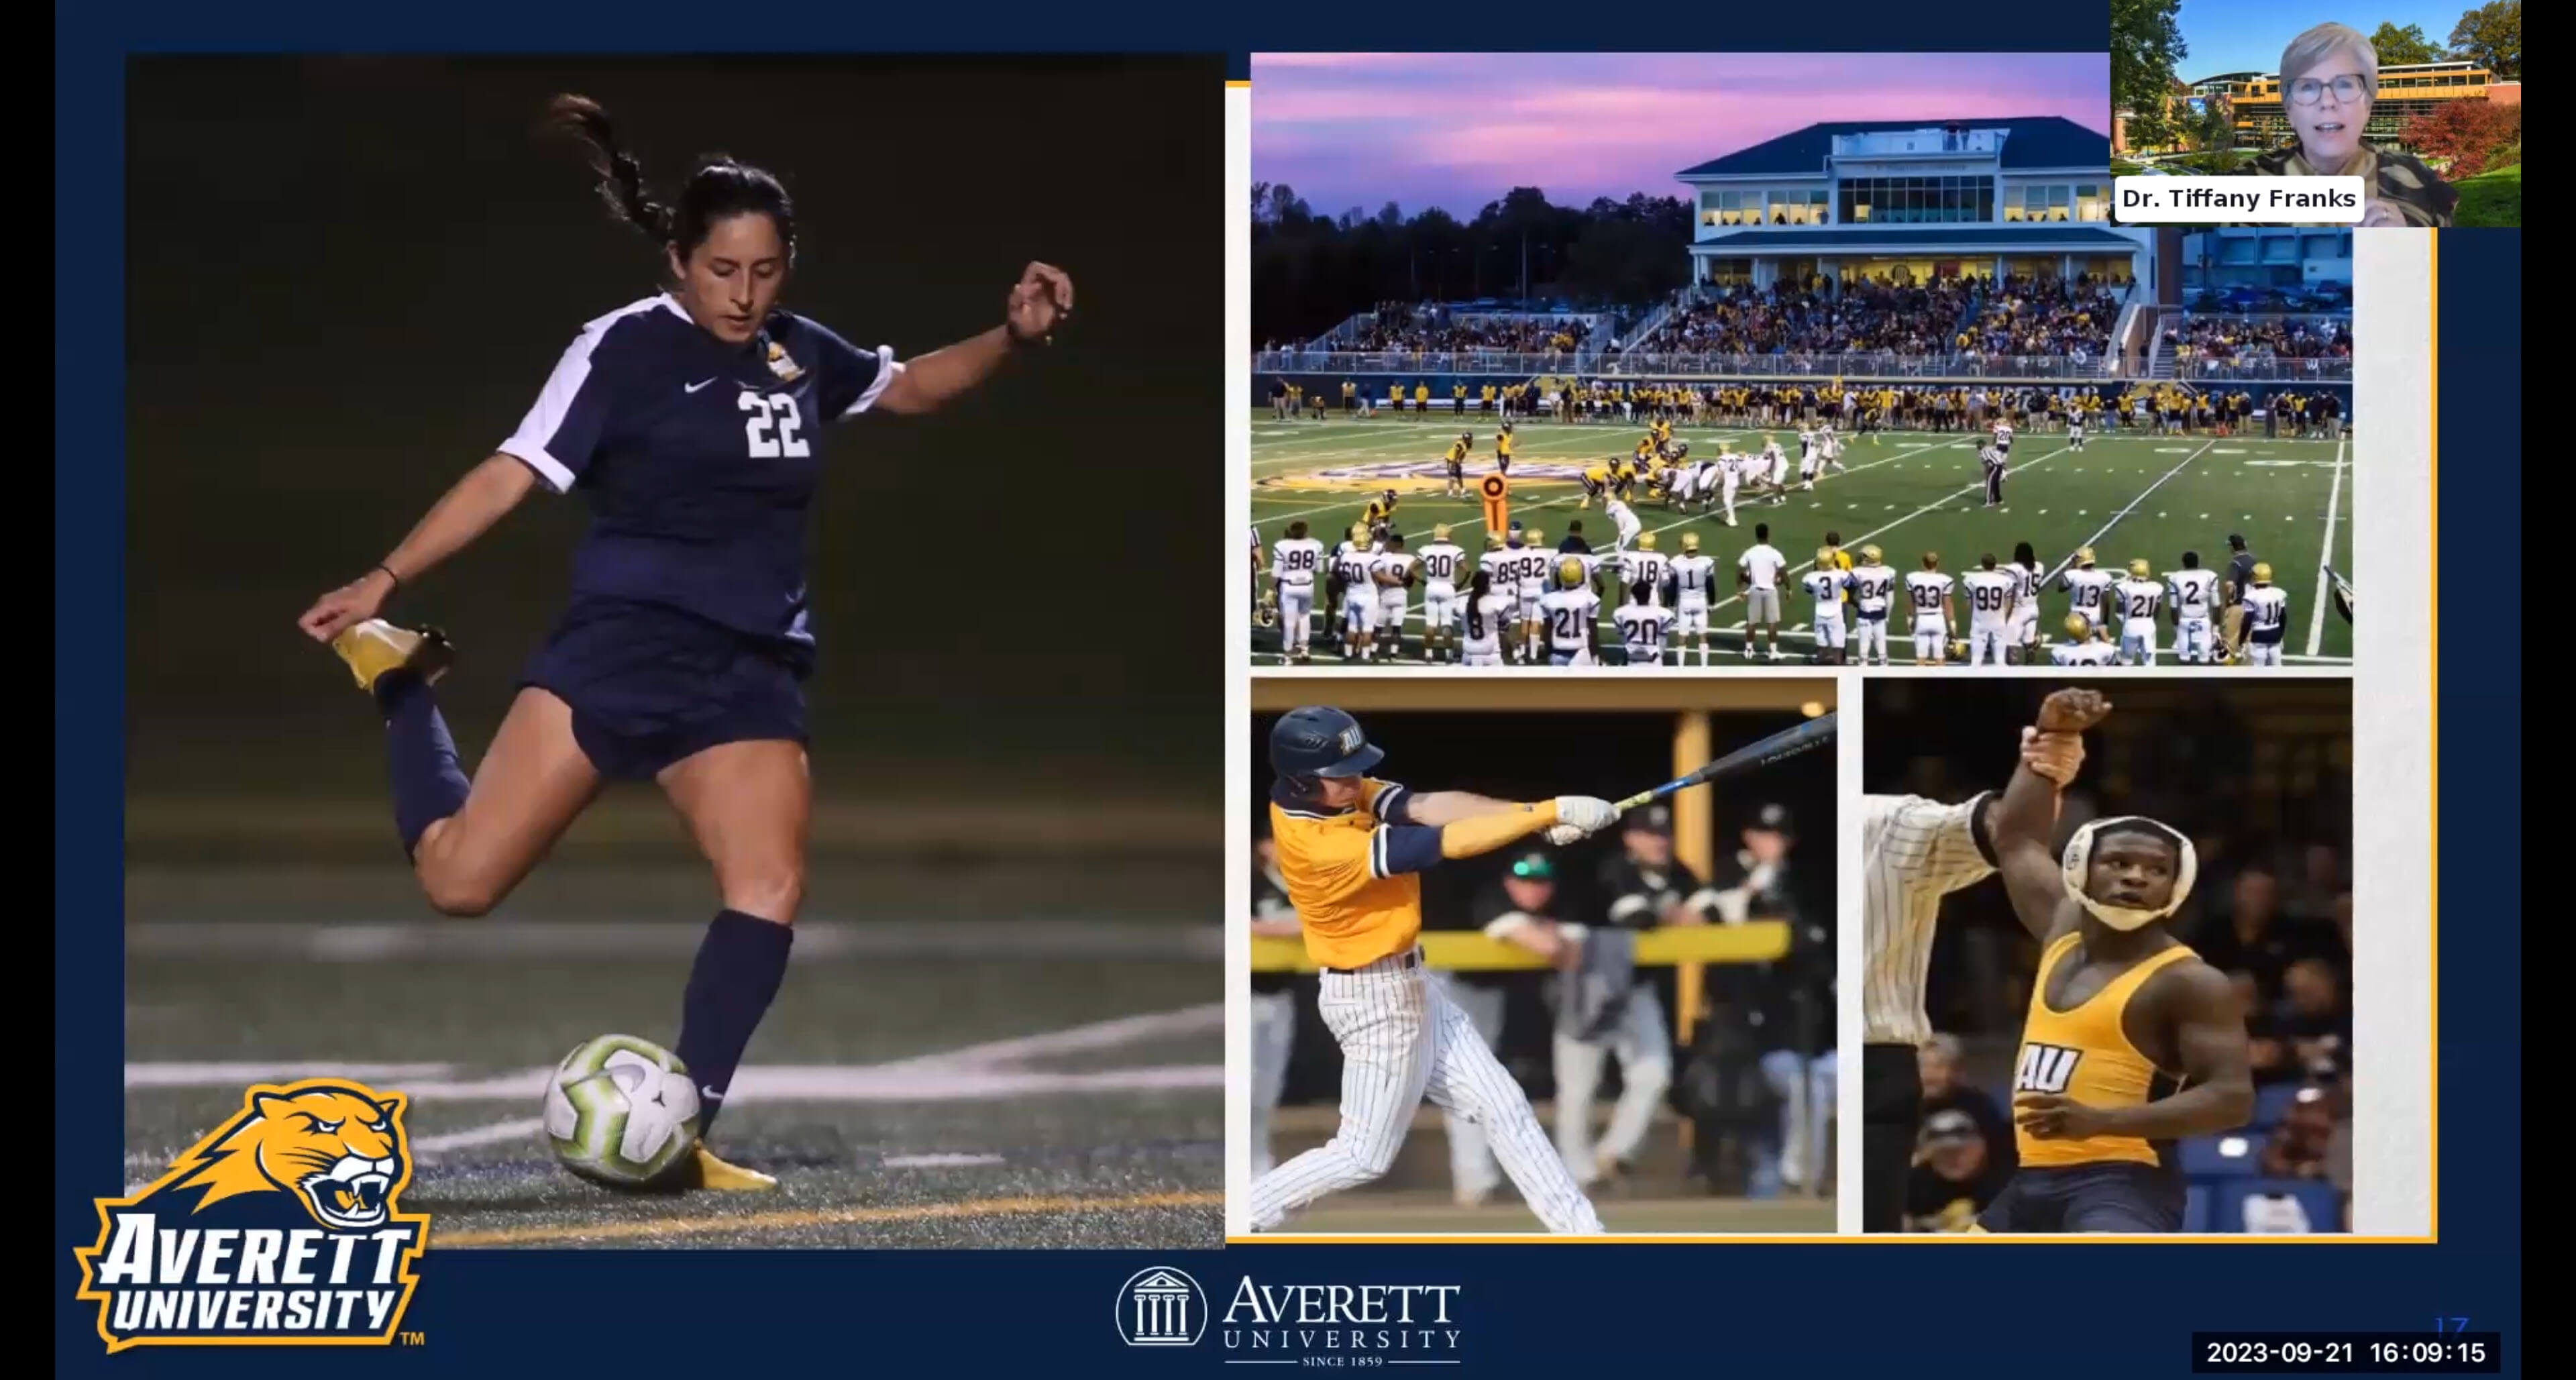 Averett University values athletics, offering 23 NCAA teams and a sense of belonging to a united tea